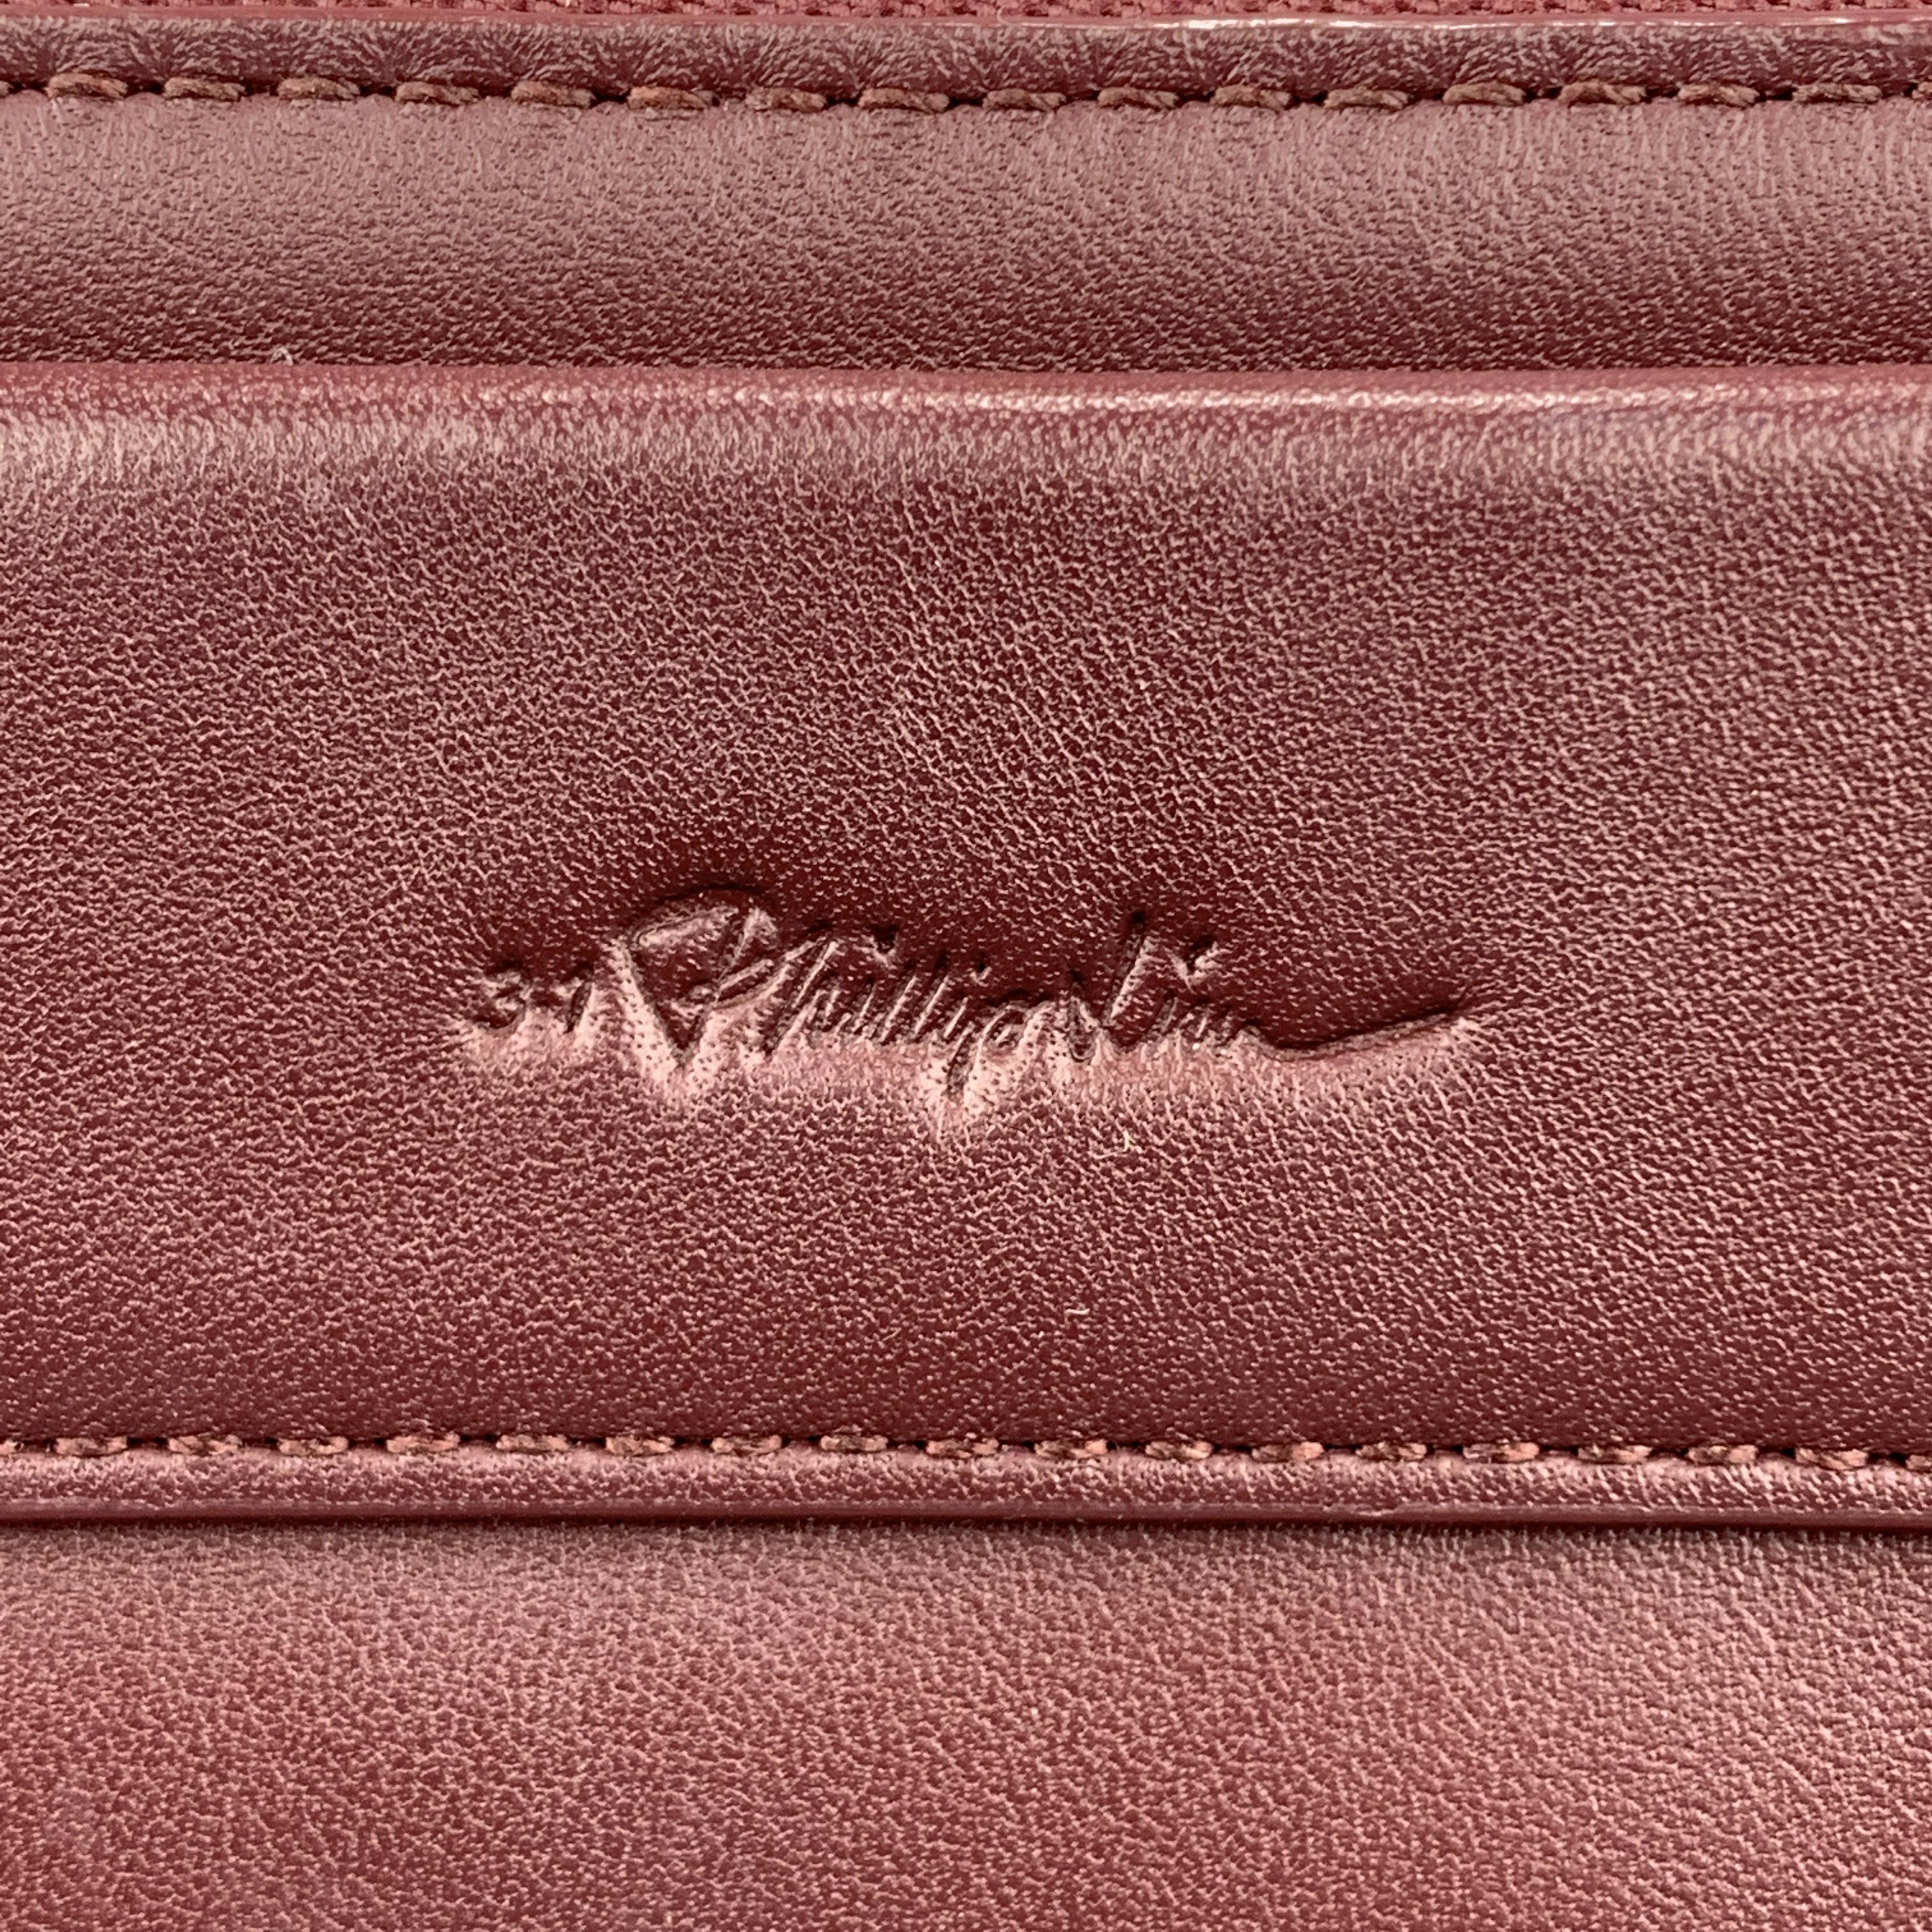 Brown 3.1 PHILLIP LIM Burgundy Leather CASH ONLY Clutch Handbag